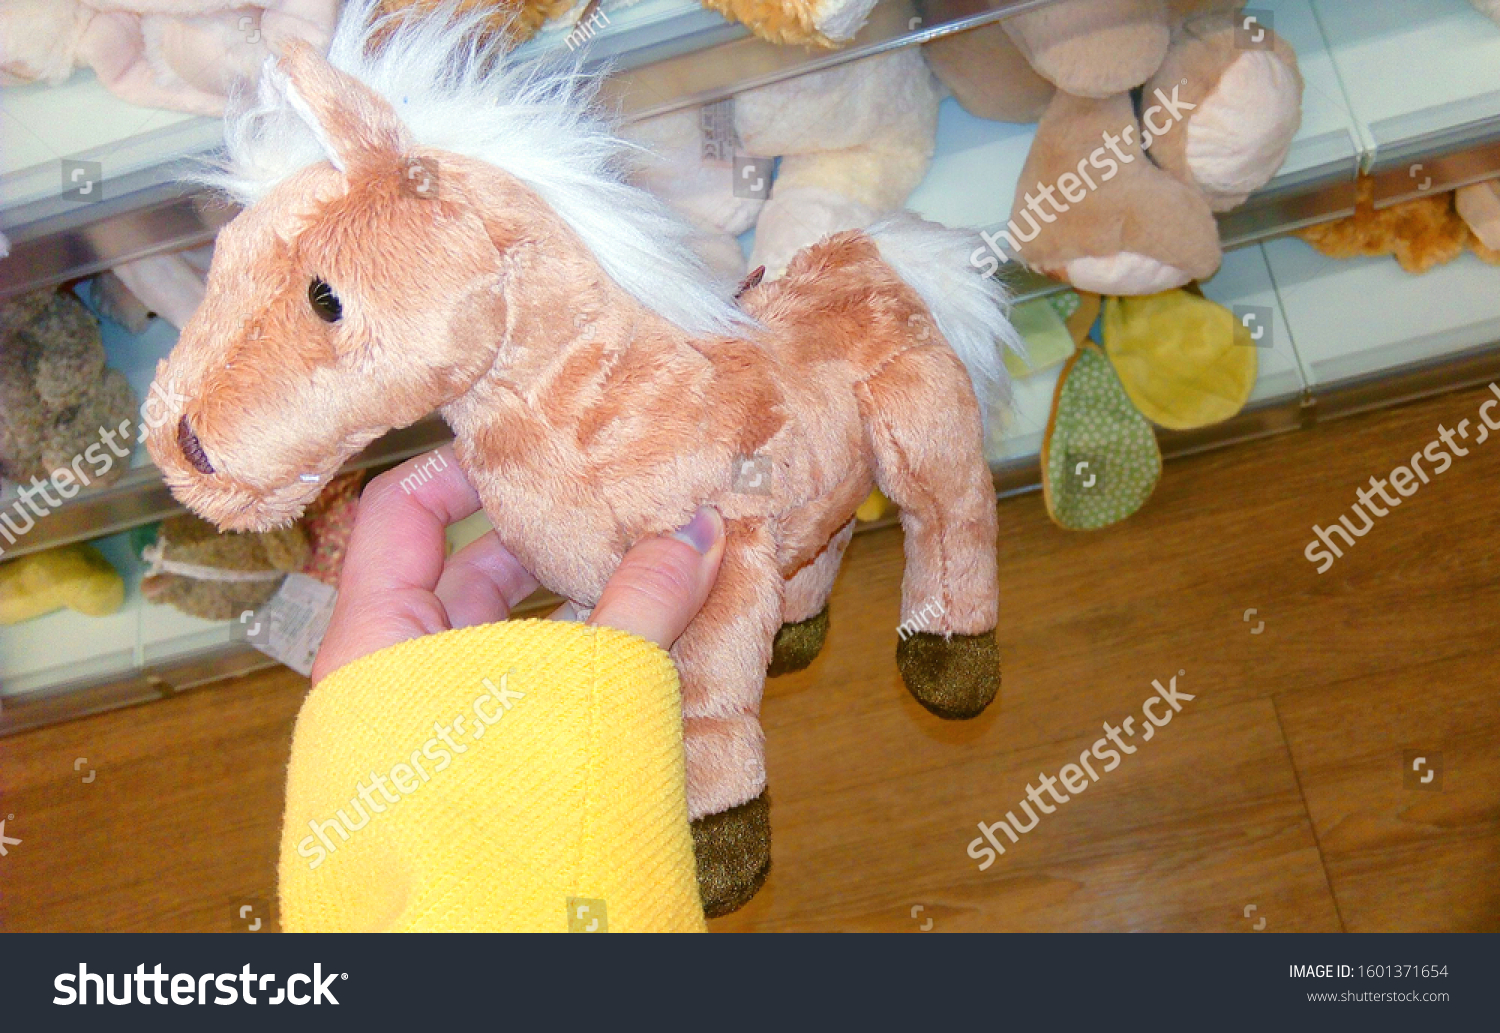 small plush horse toys